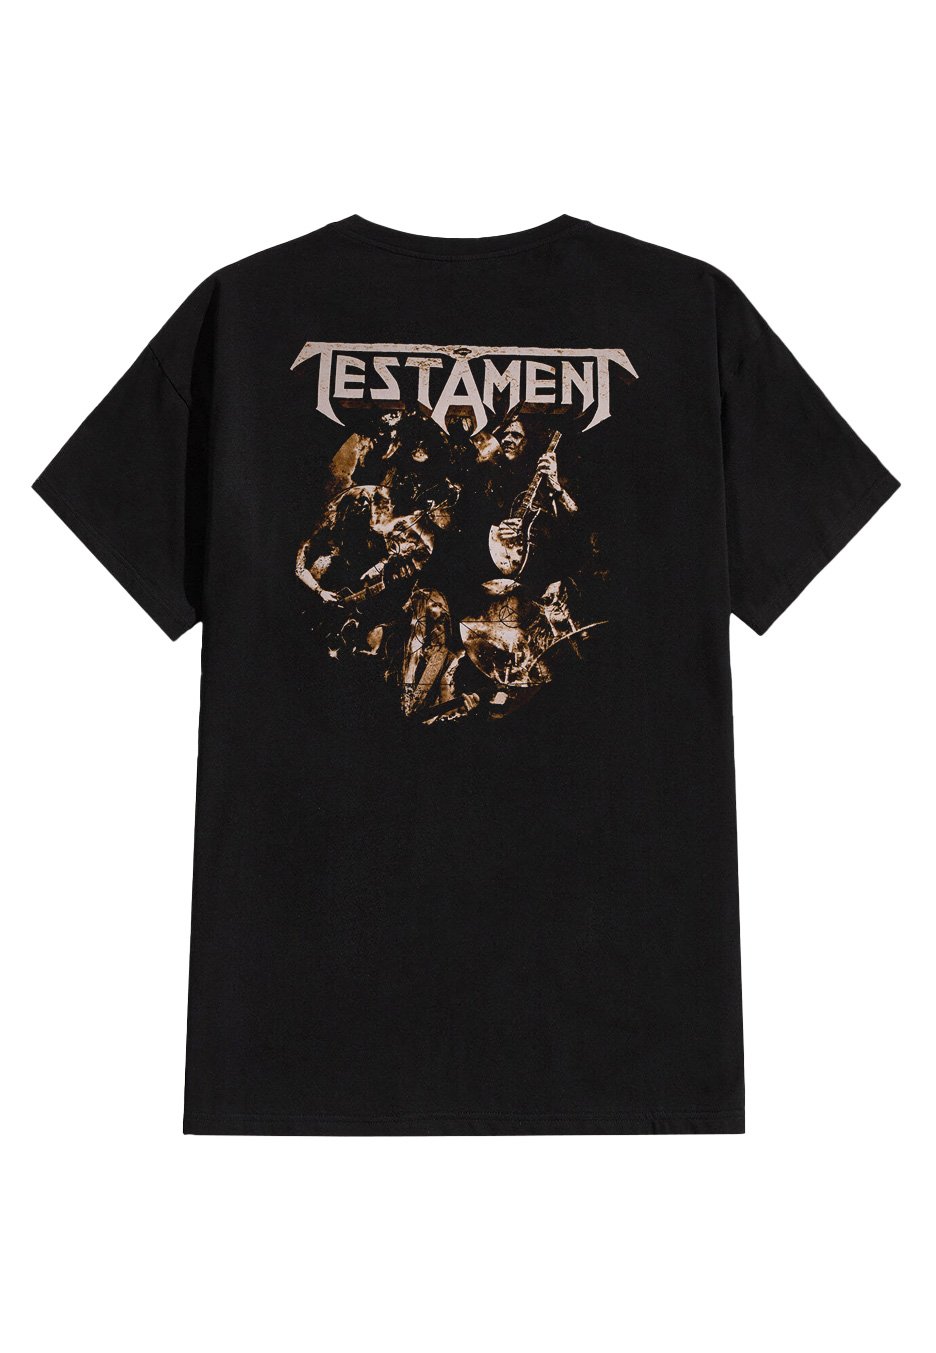 Testament - Titans Of Creation - T-Shirt